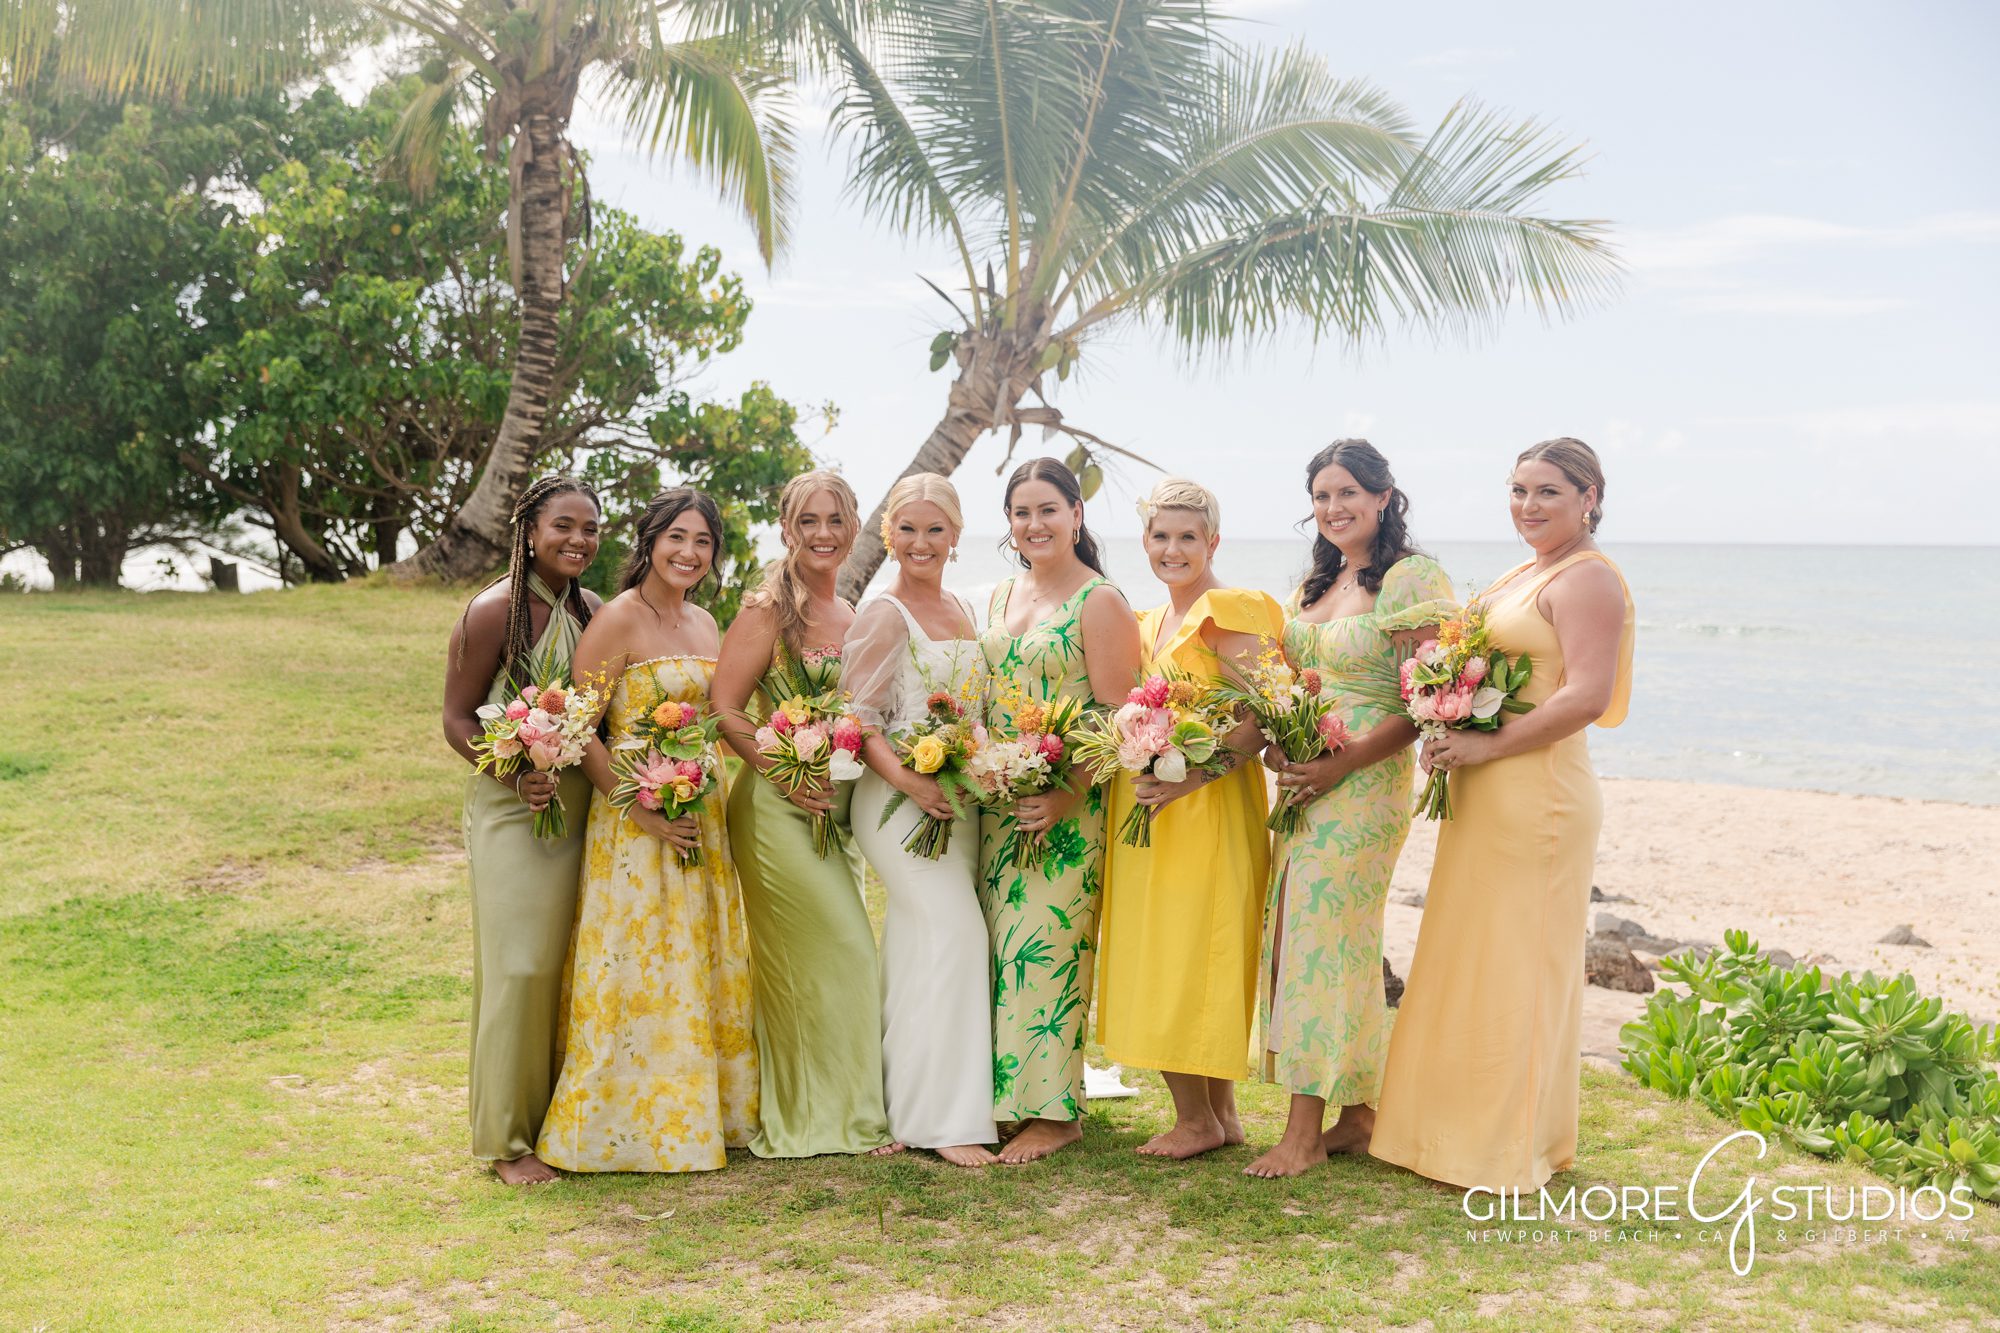 Loulu Palm Wedding Photography, Oahu Weddinga - North Shore - Hawaii - Hawaiian Wedding Venue - Beach Wedding - Aloha Wedding - Gilmore Studios - Bride and bridesmaid dresses - floral bridesmaid dress - flowers - floral - bouquet - island flower - 